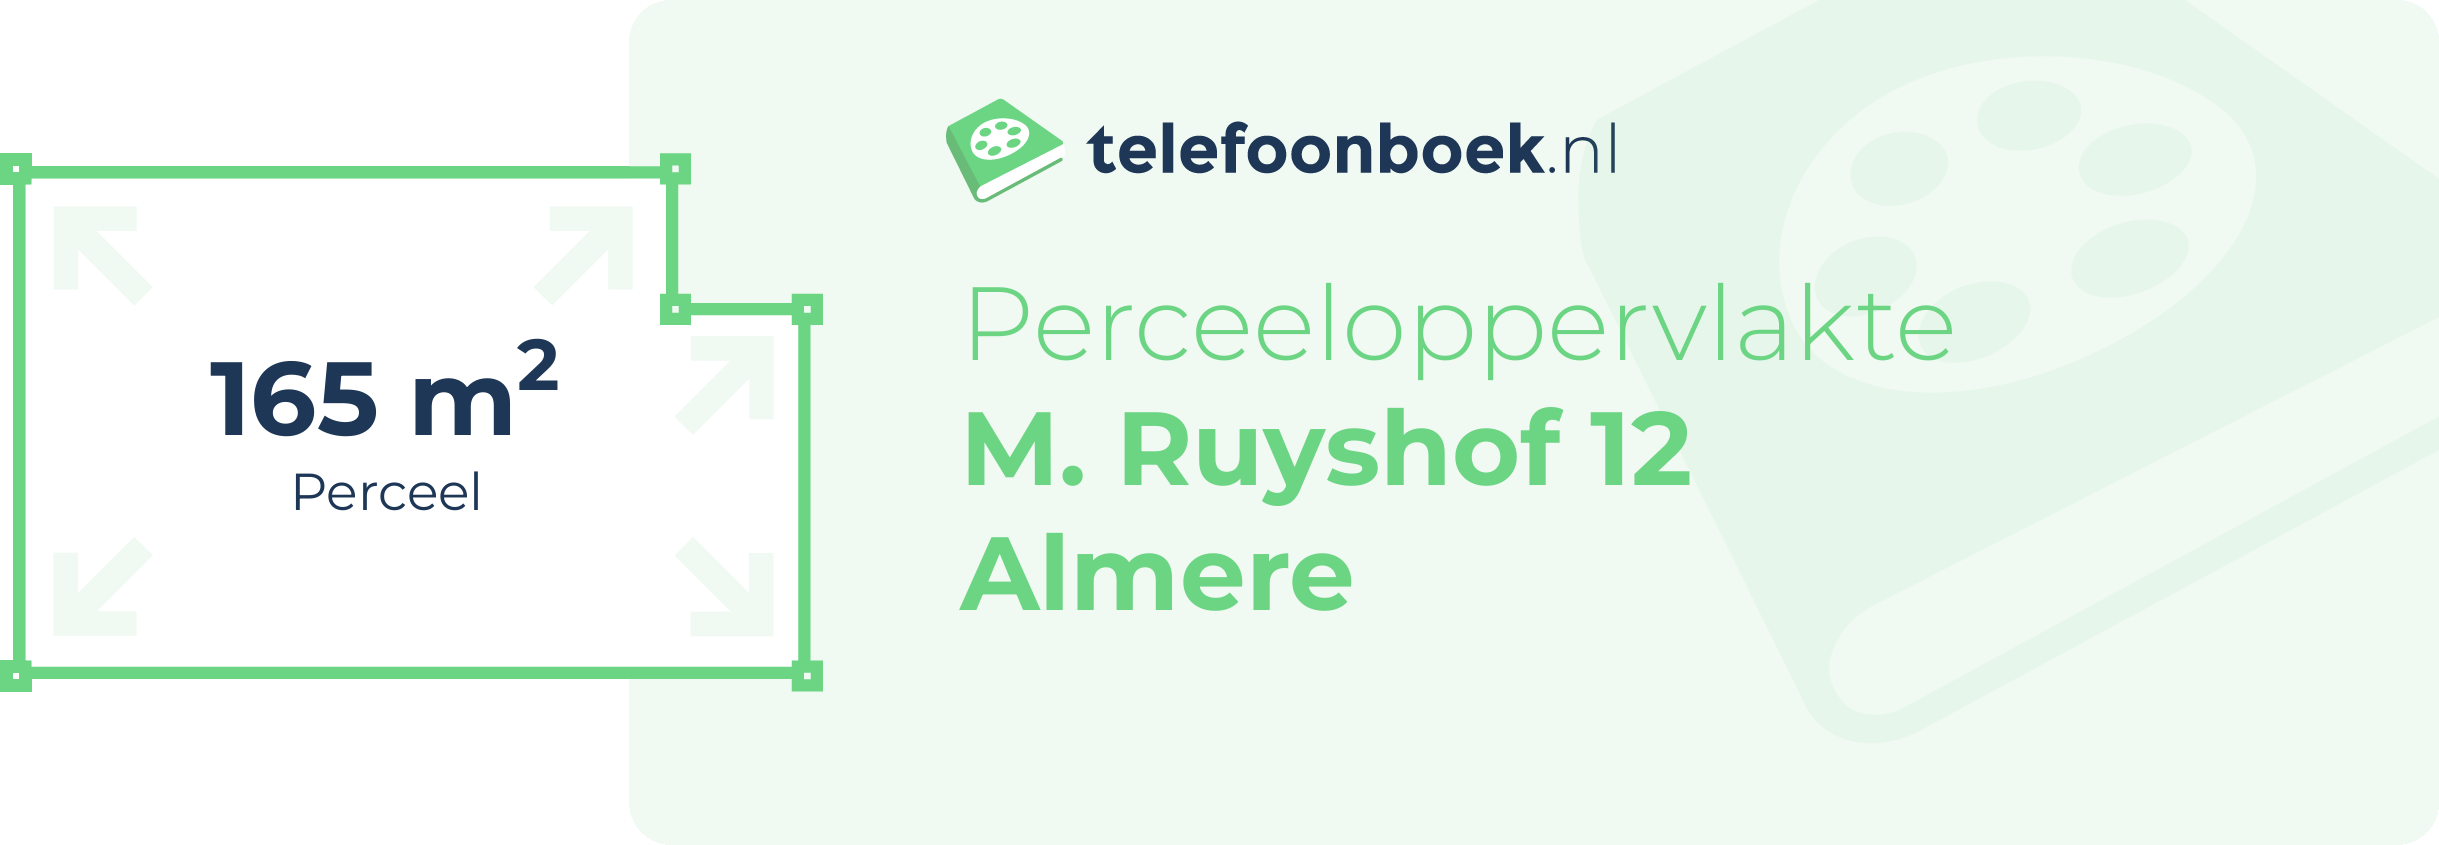 Perceeloppervlakte M. Ruyshof 12 Almere